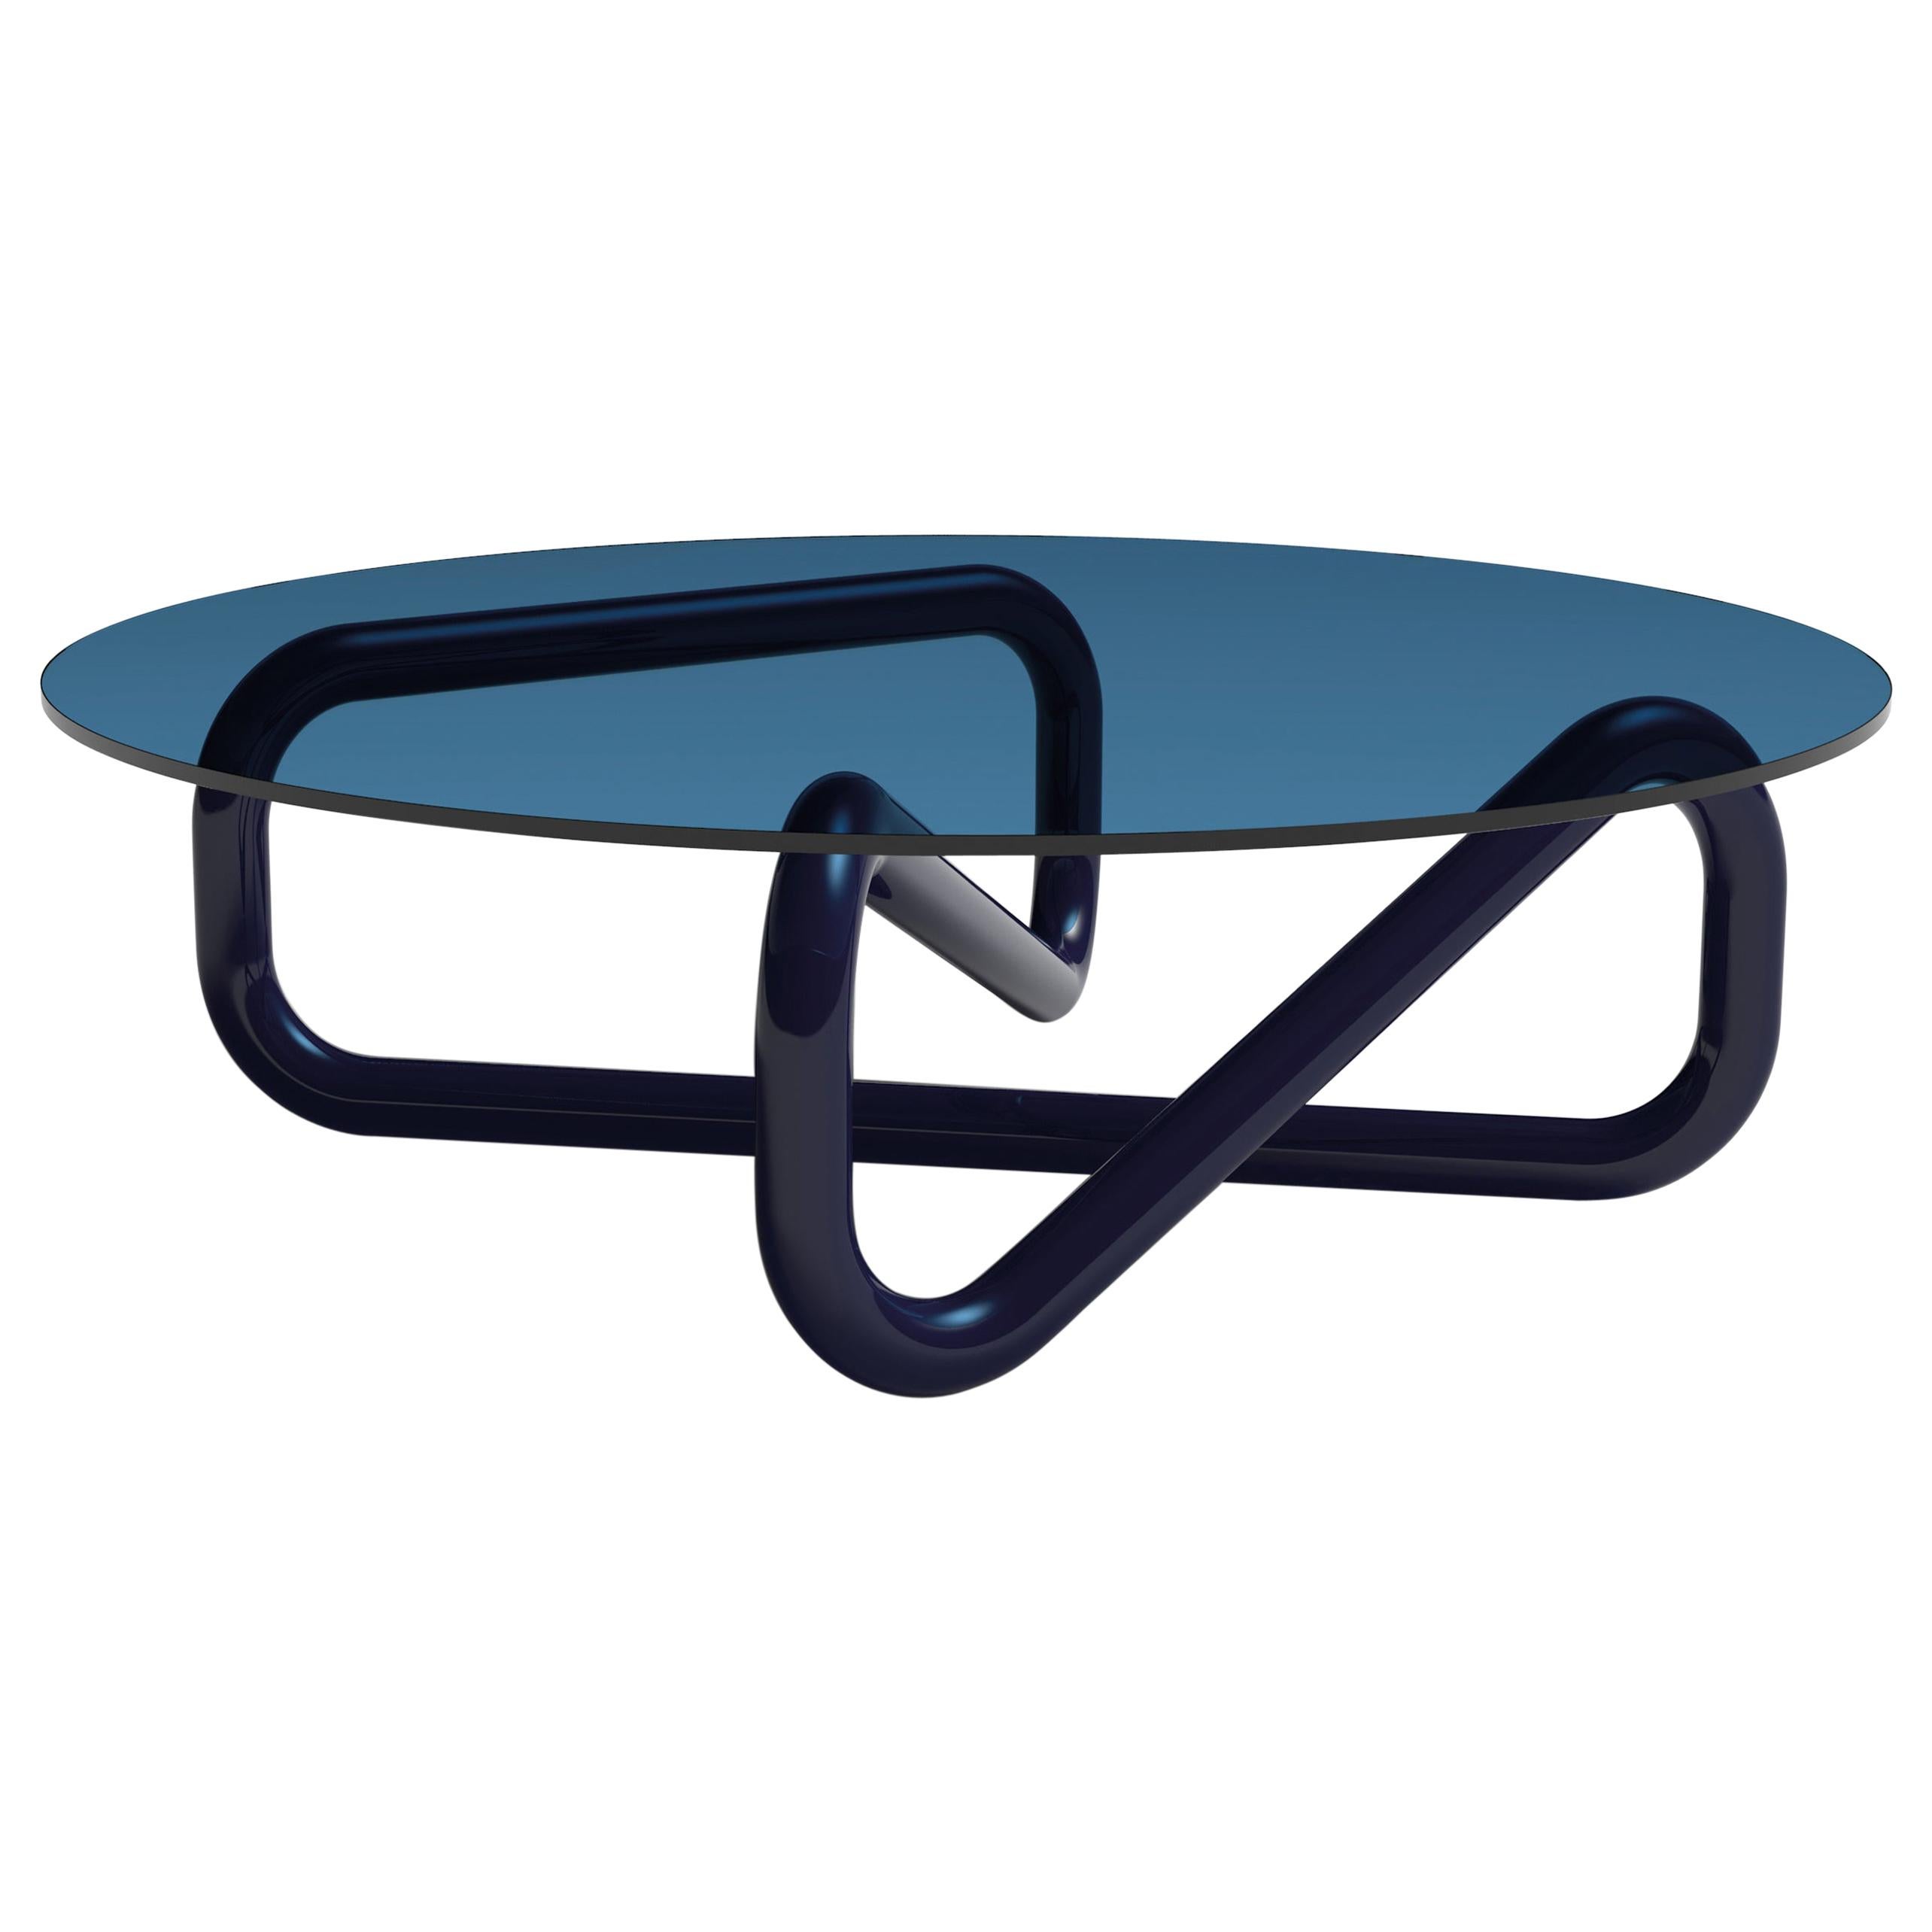 Arflex Infinity 130 cm  Petite table en verre bleu clair de Claesson Koivisto Rune